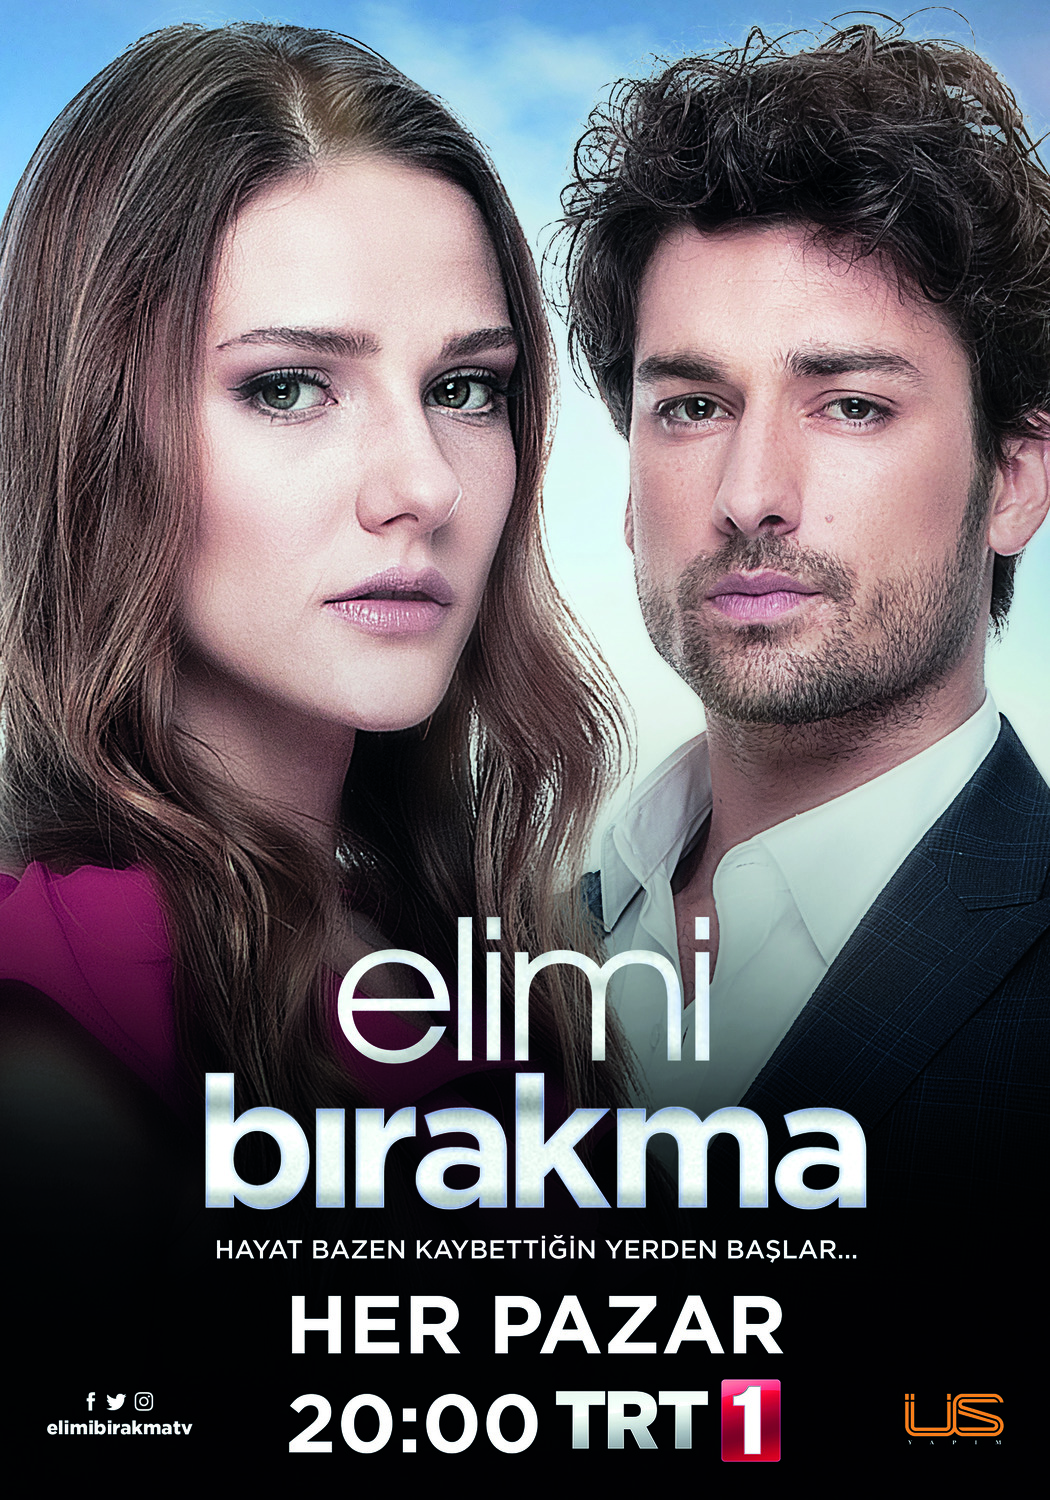 Extra Large TV Poster Image for Elimi birakma (#1 of 20)